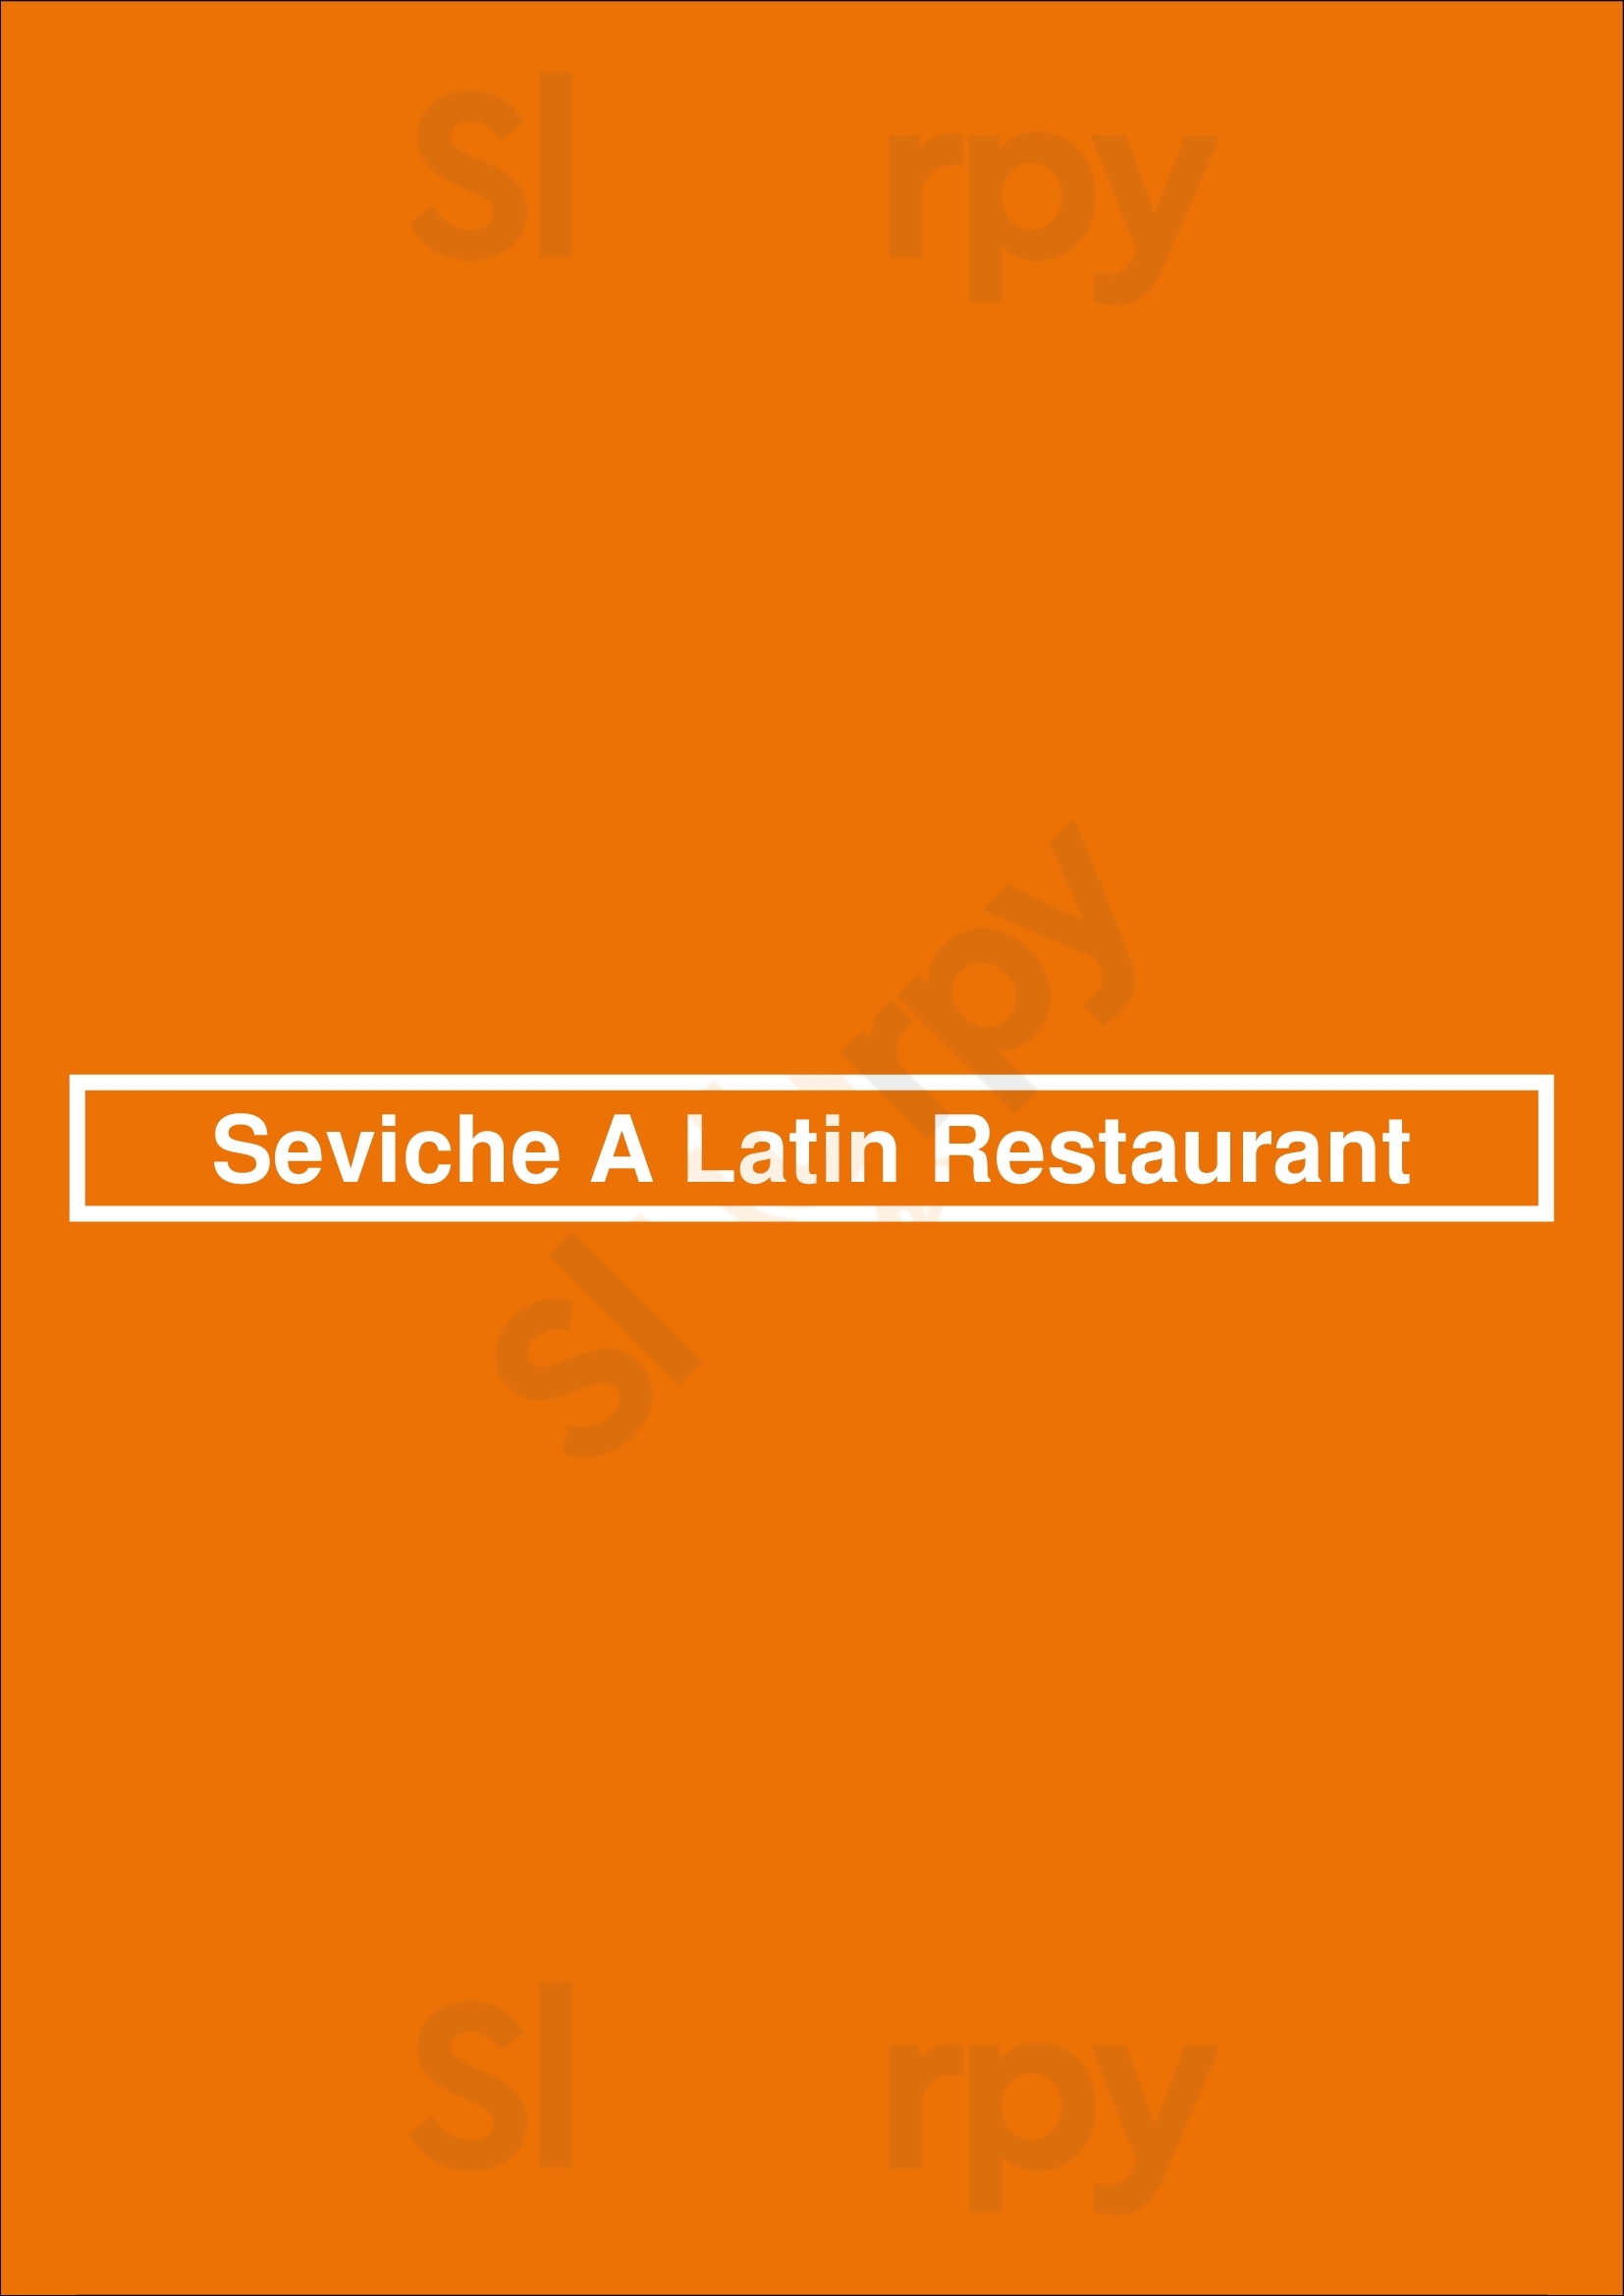 Seviche A Latin Restaurant Louisville Menu - 1